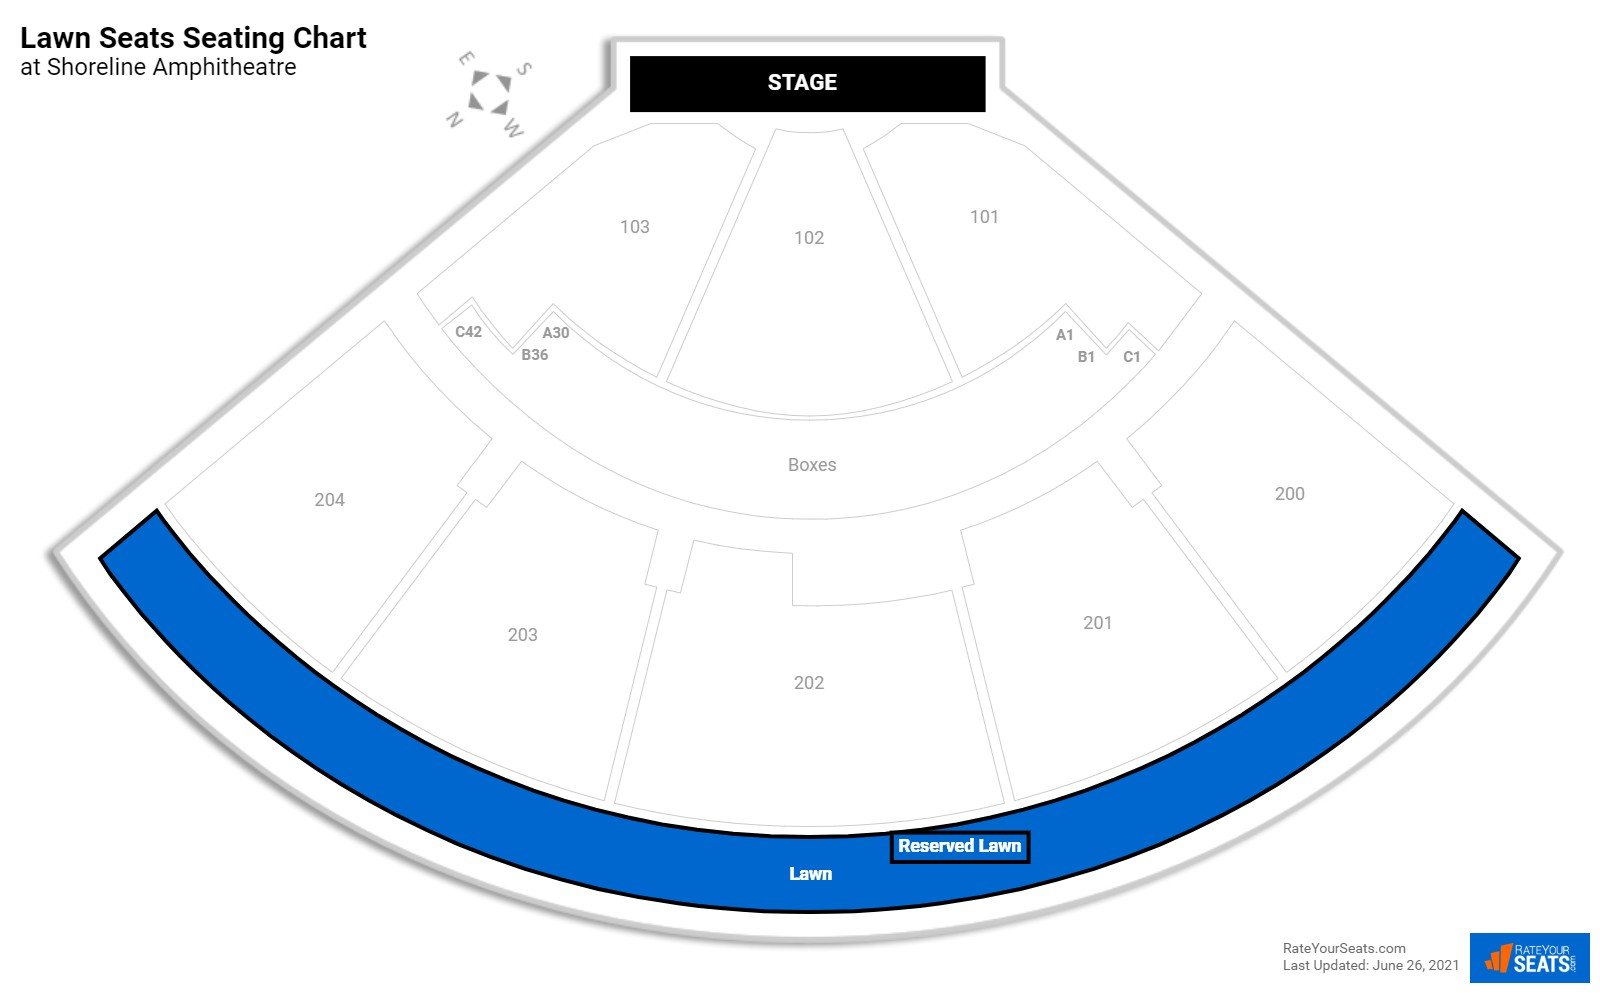 Concert Lawn Seats Seating Chart at Shoreline Amphitheatre